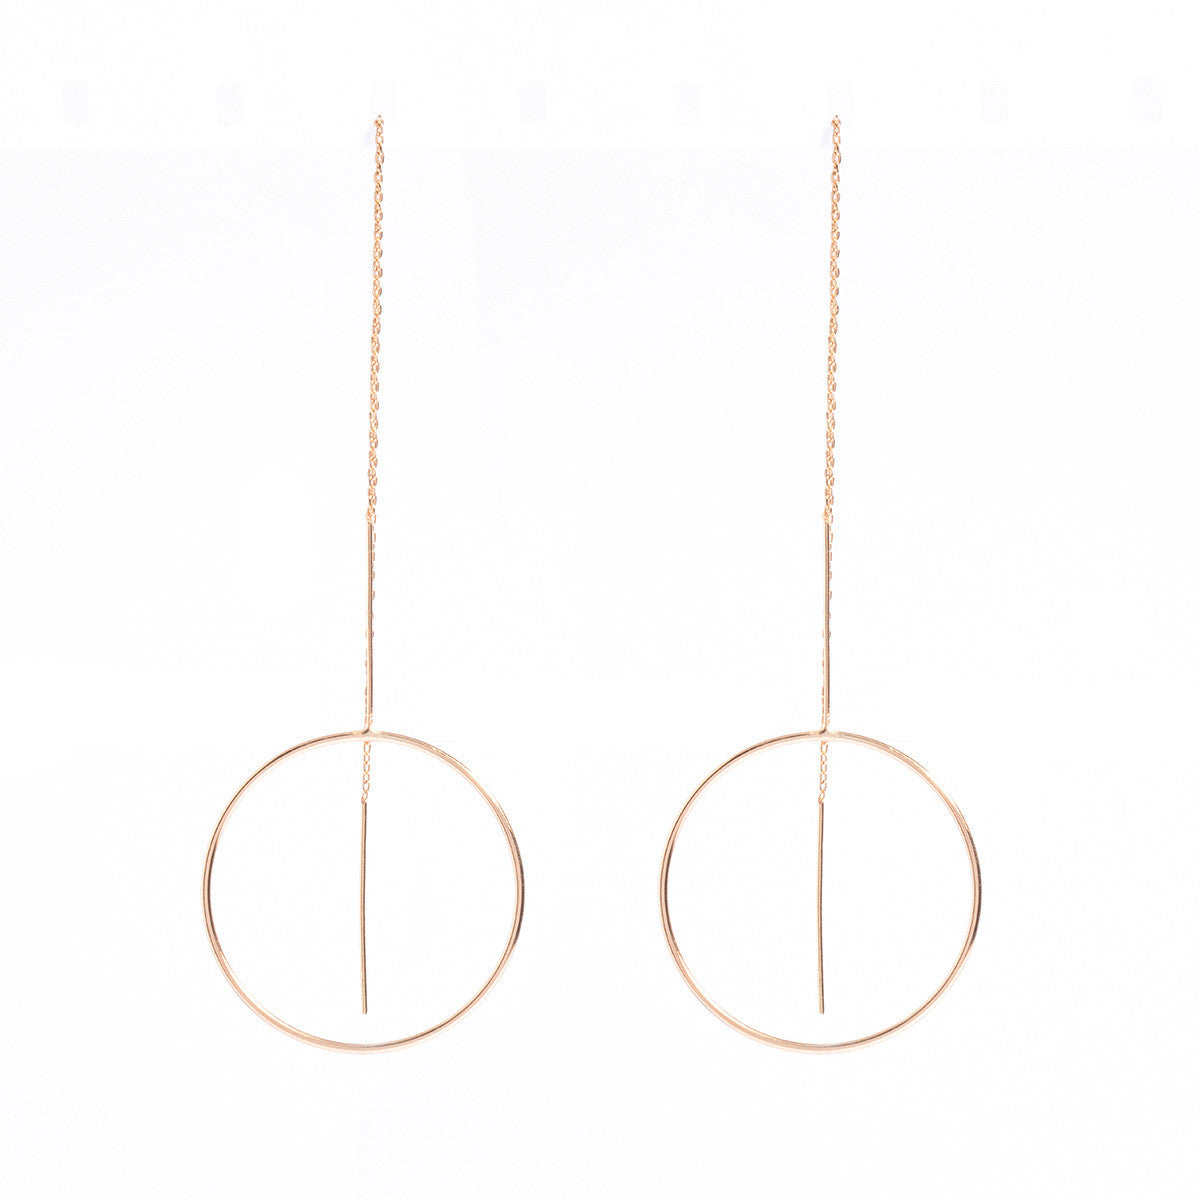 Strip Loops Tassels Earrings - Oh Yours Fashion - 2